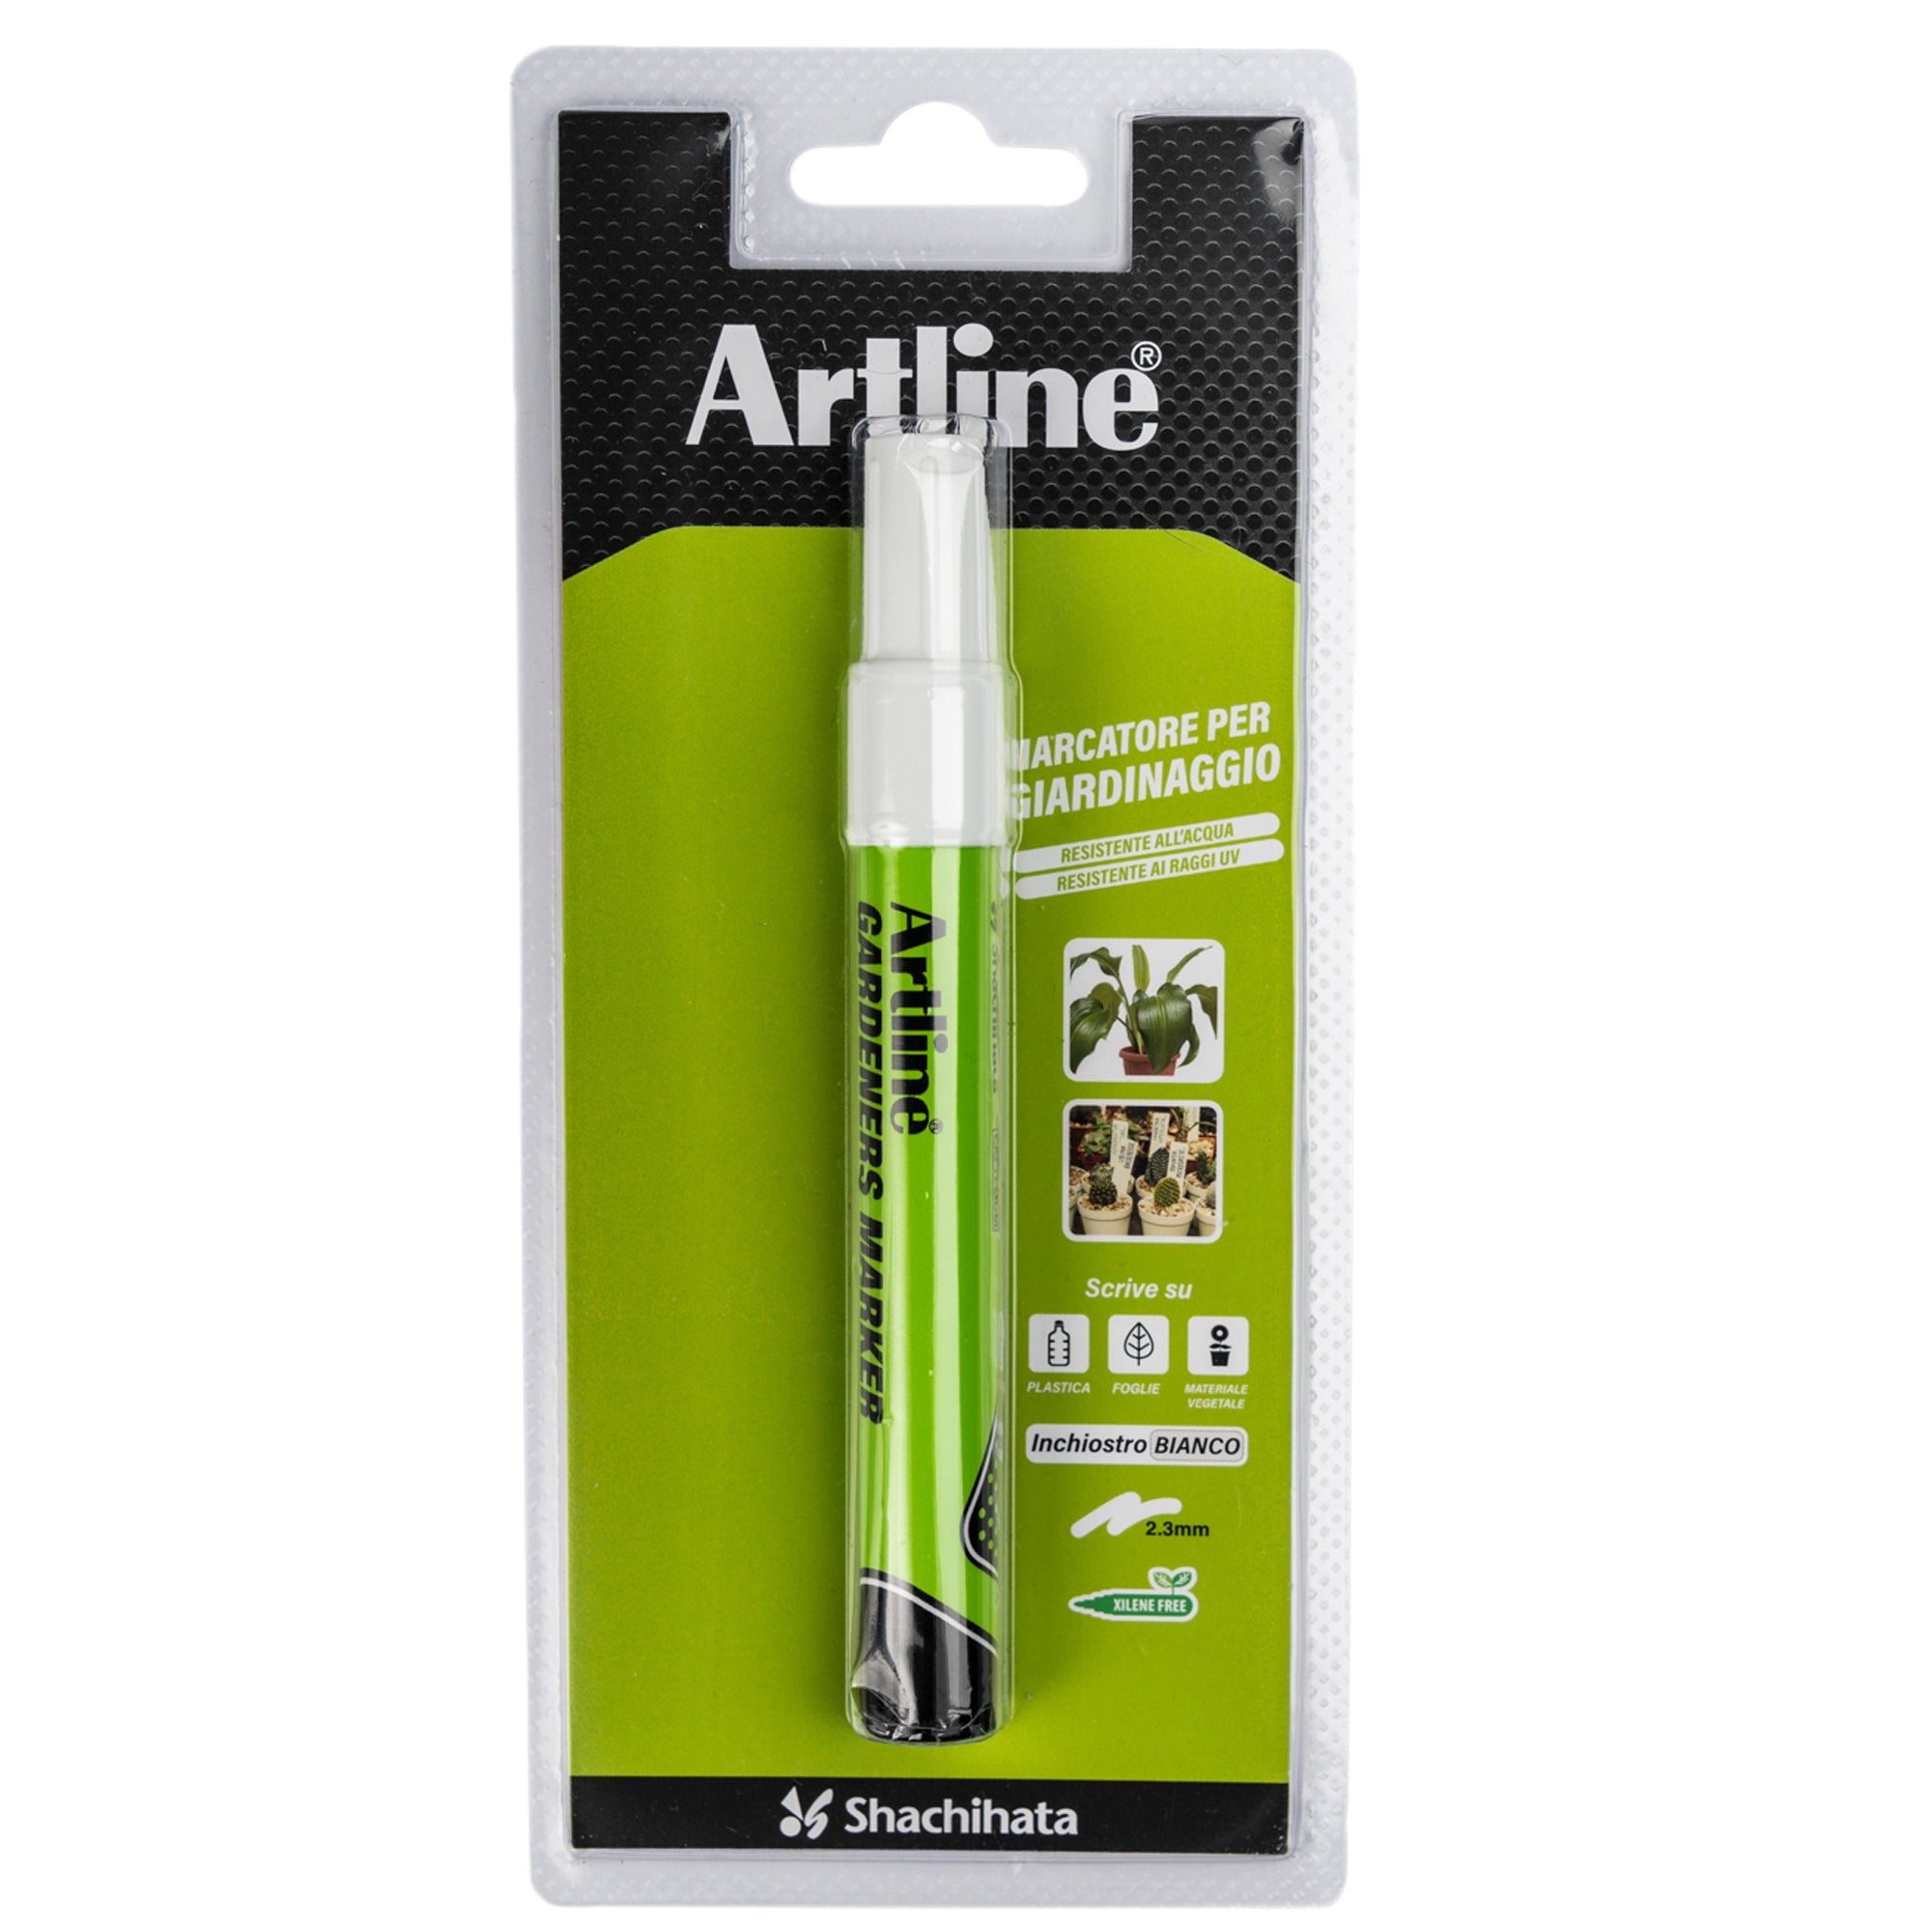 artline-marcatore-permanente-speciale-giardinaggio-punta-2-3mm-tonda-bianco